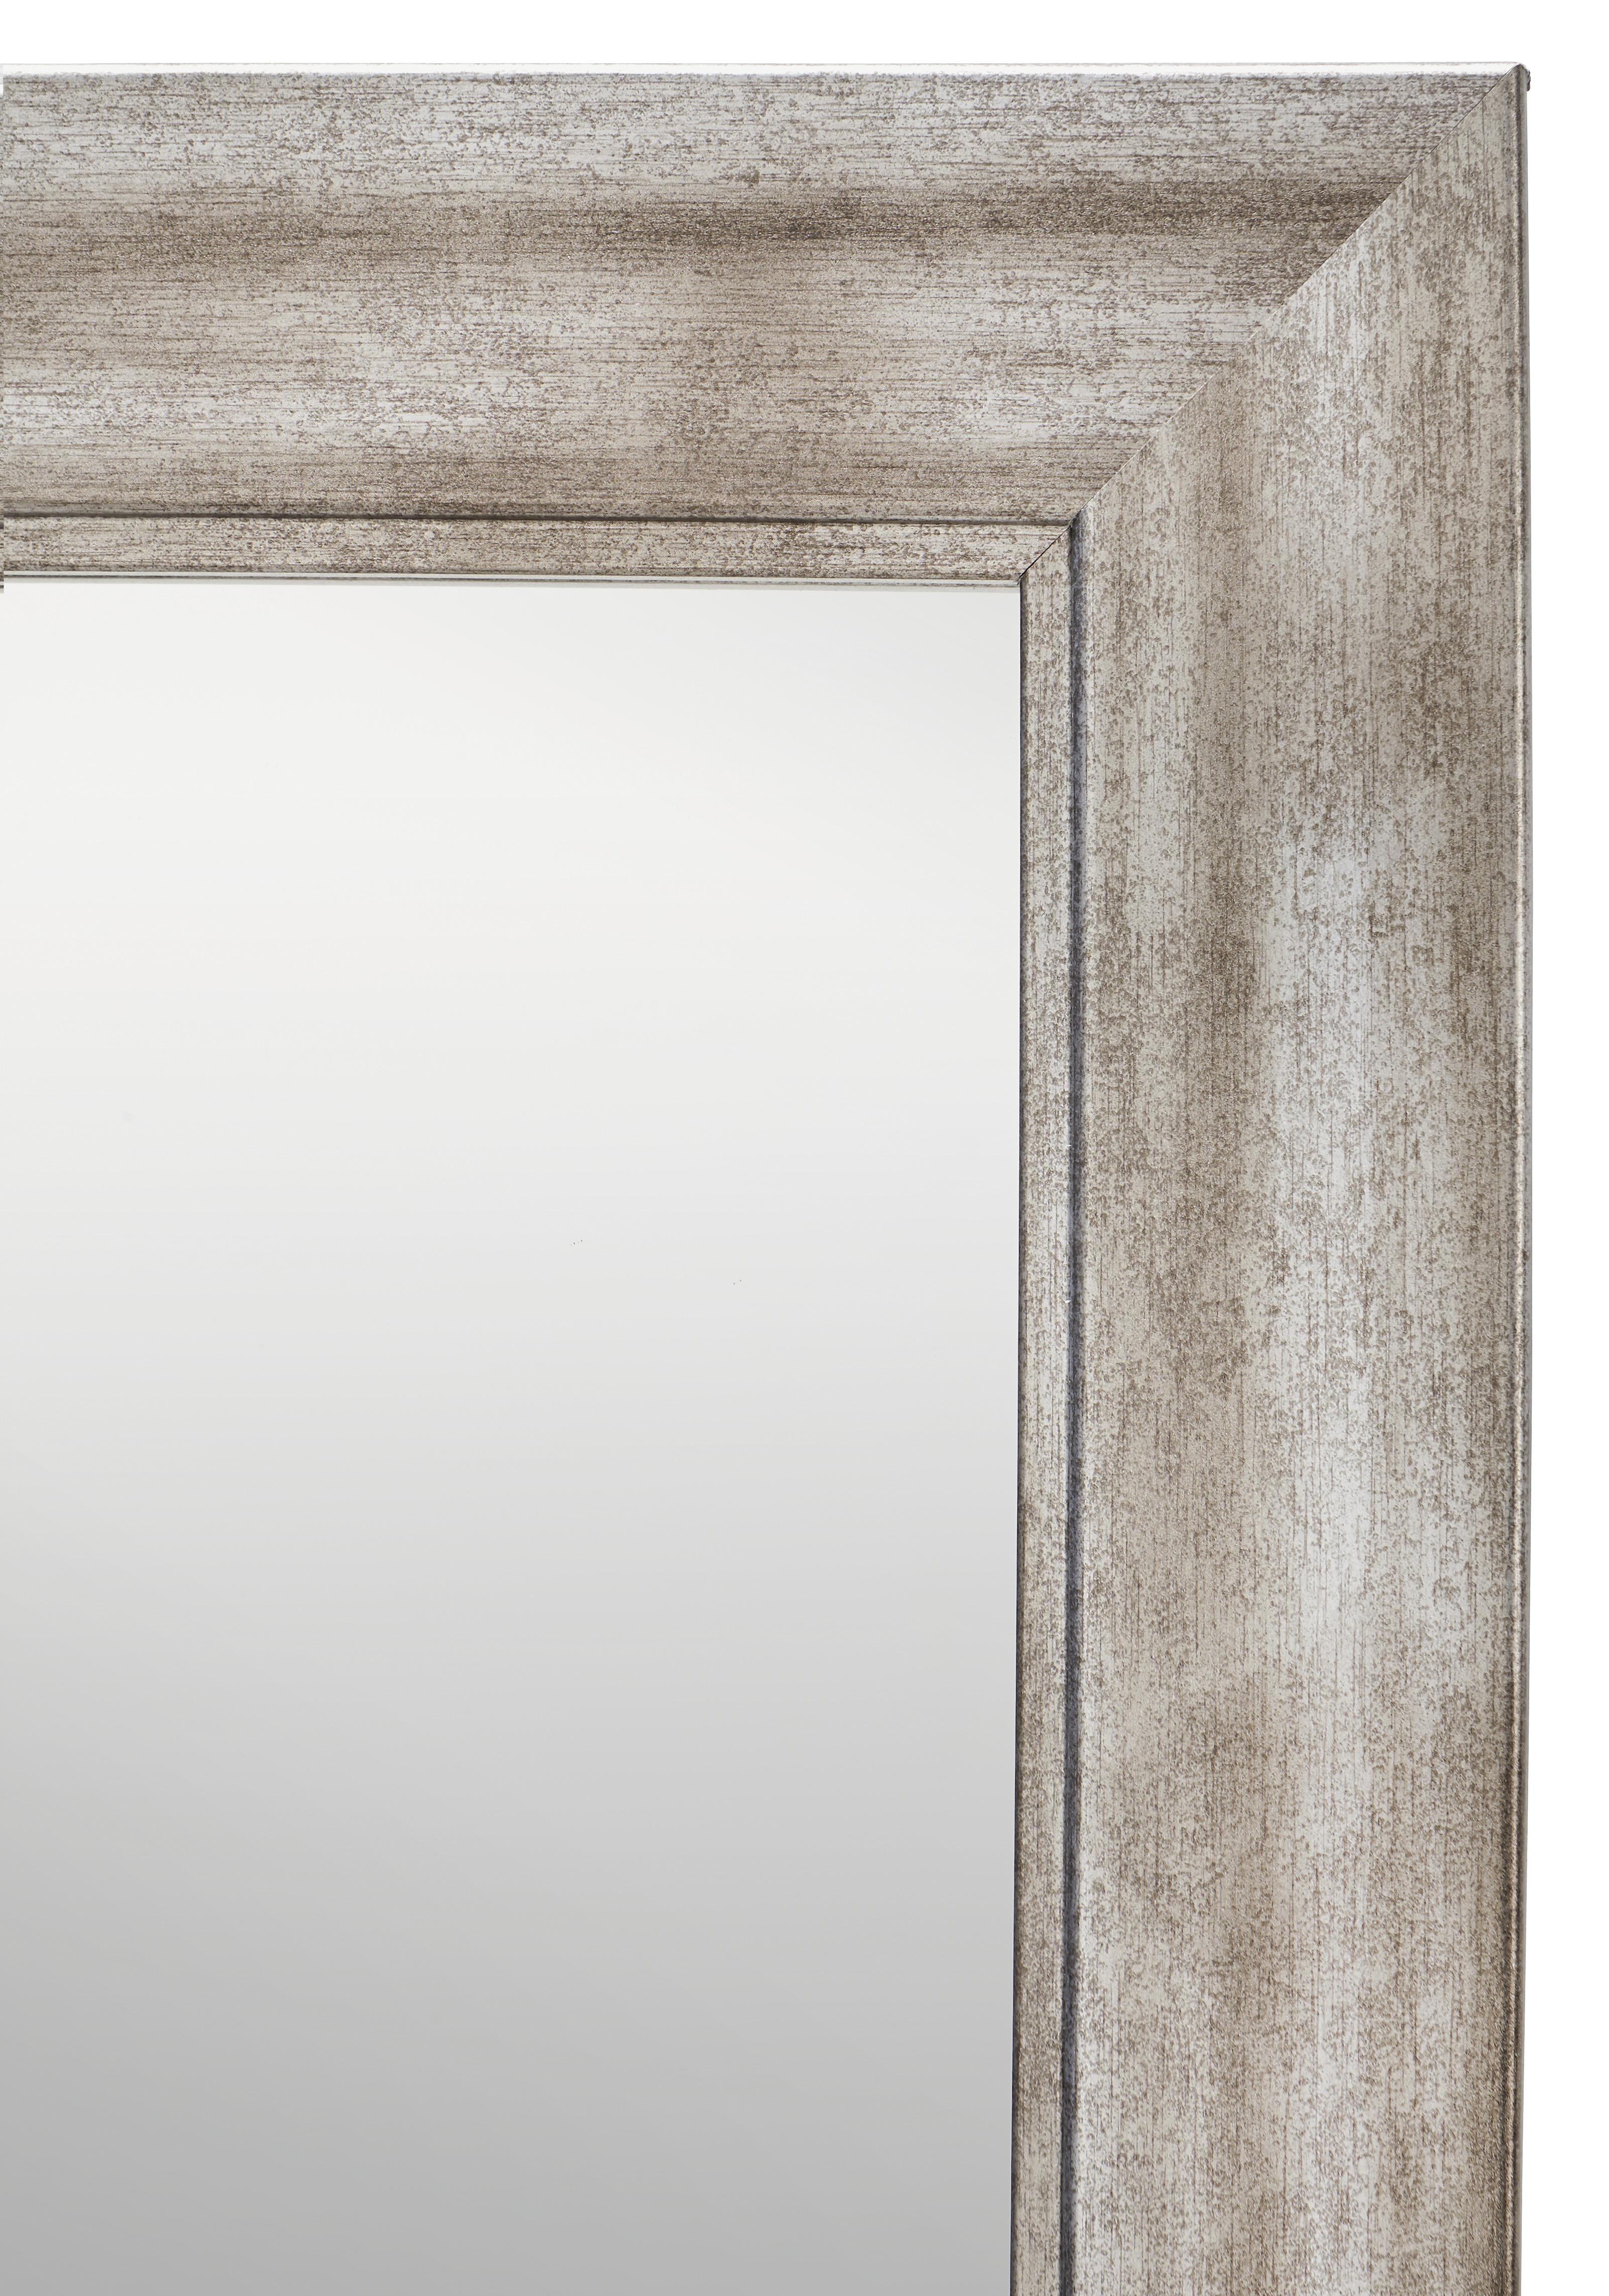 OGLEDALO ZIDNO METALLIC - srebrne boje/boje nikla, Romantik / Landhaus, drvni materijal (66/186cm)